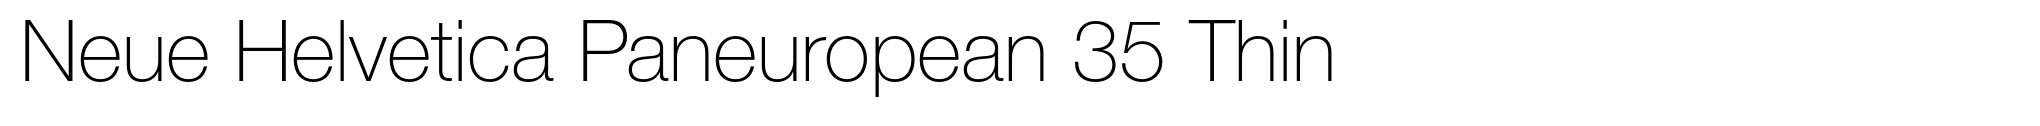 Neue Helvetica Paneuropean 35 Thin image